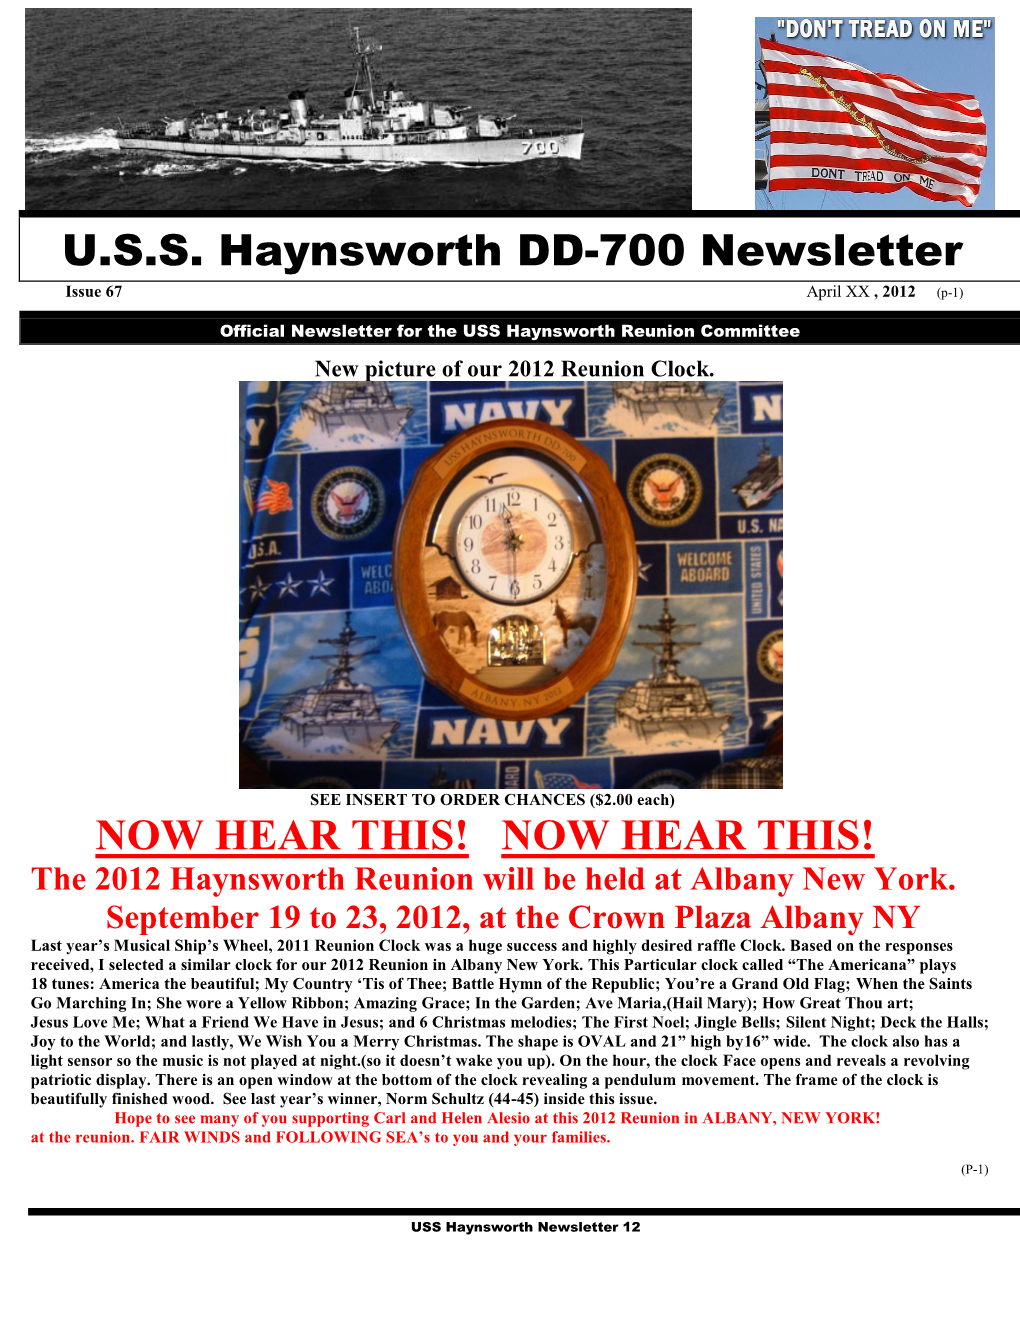 U.S.S. Haynsworth DD-700 Newsletter NOW HEAR THIS! NOW HEAR THIS!